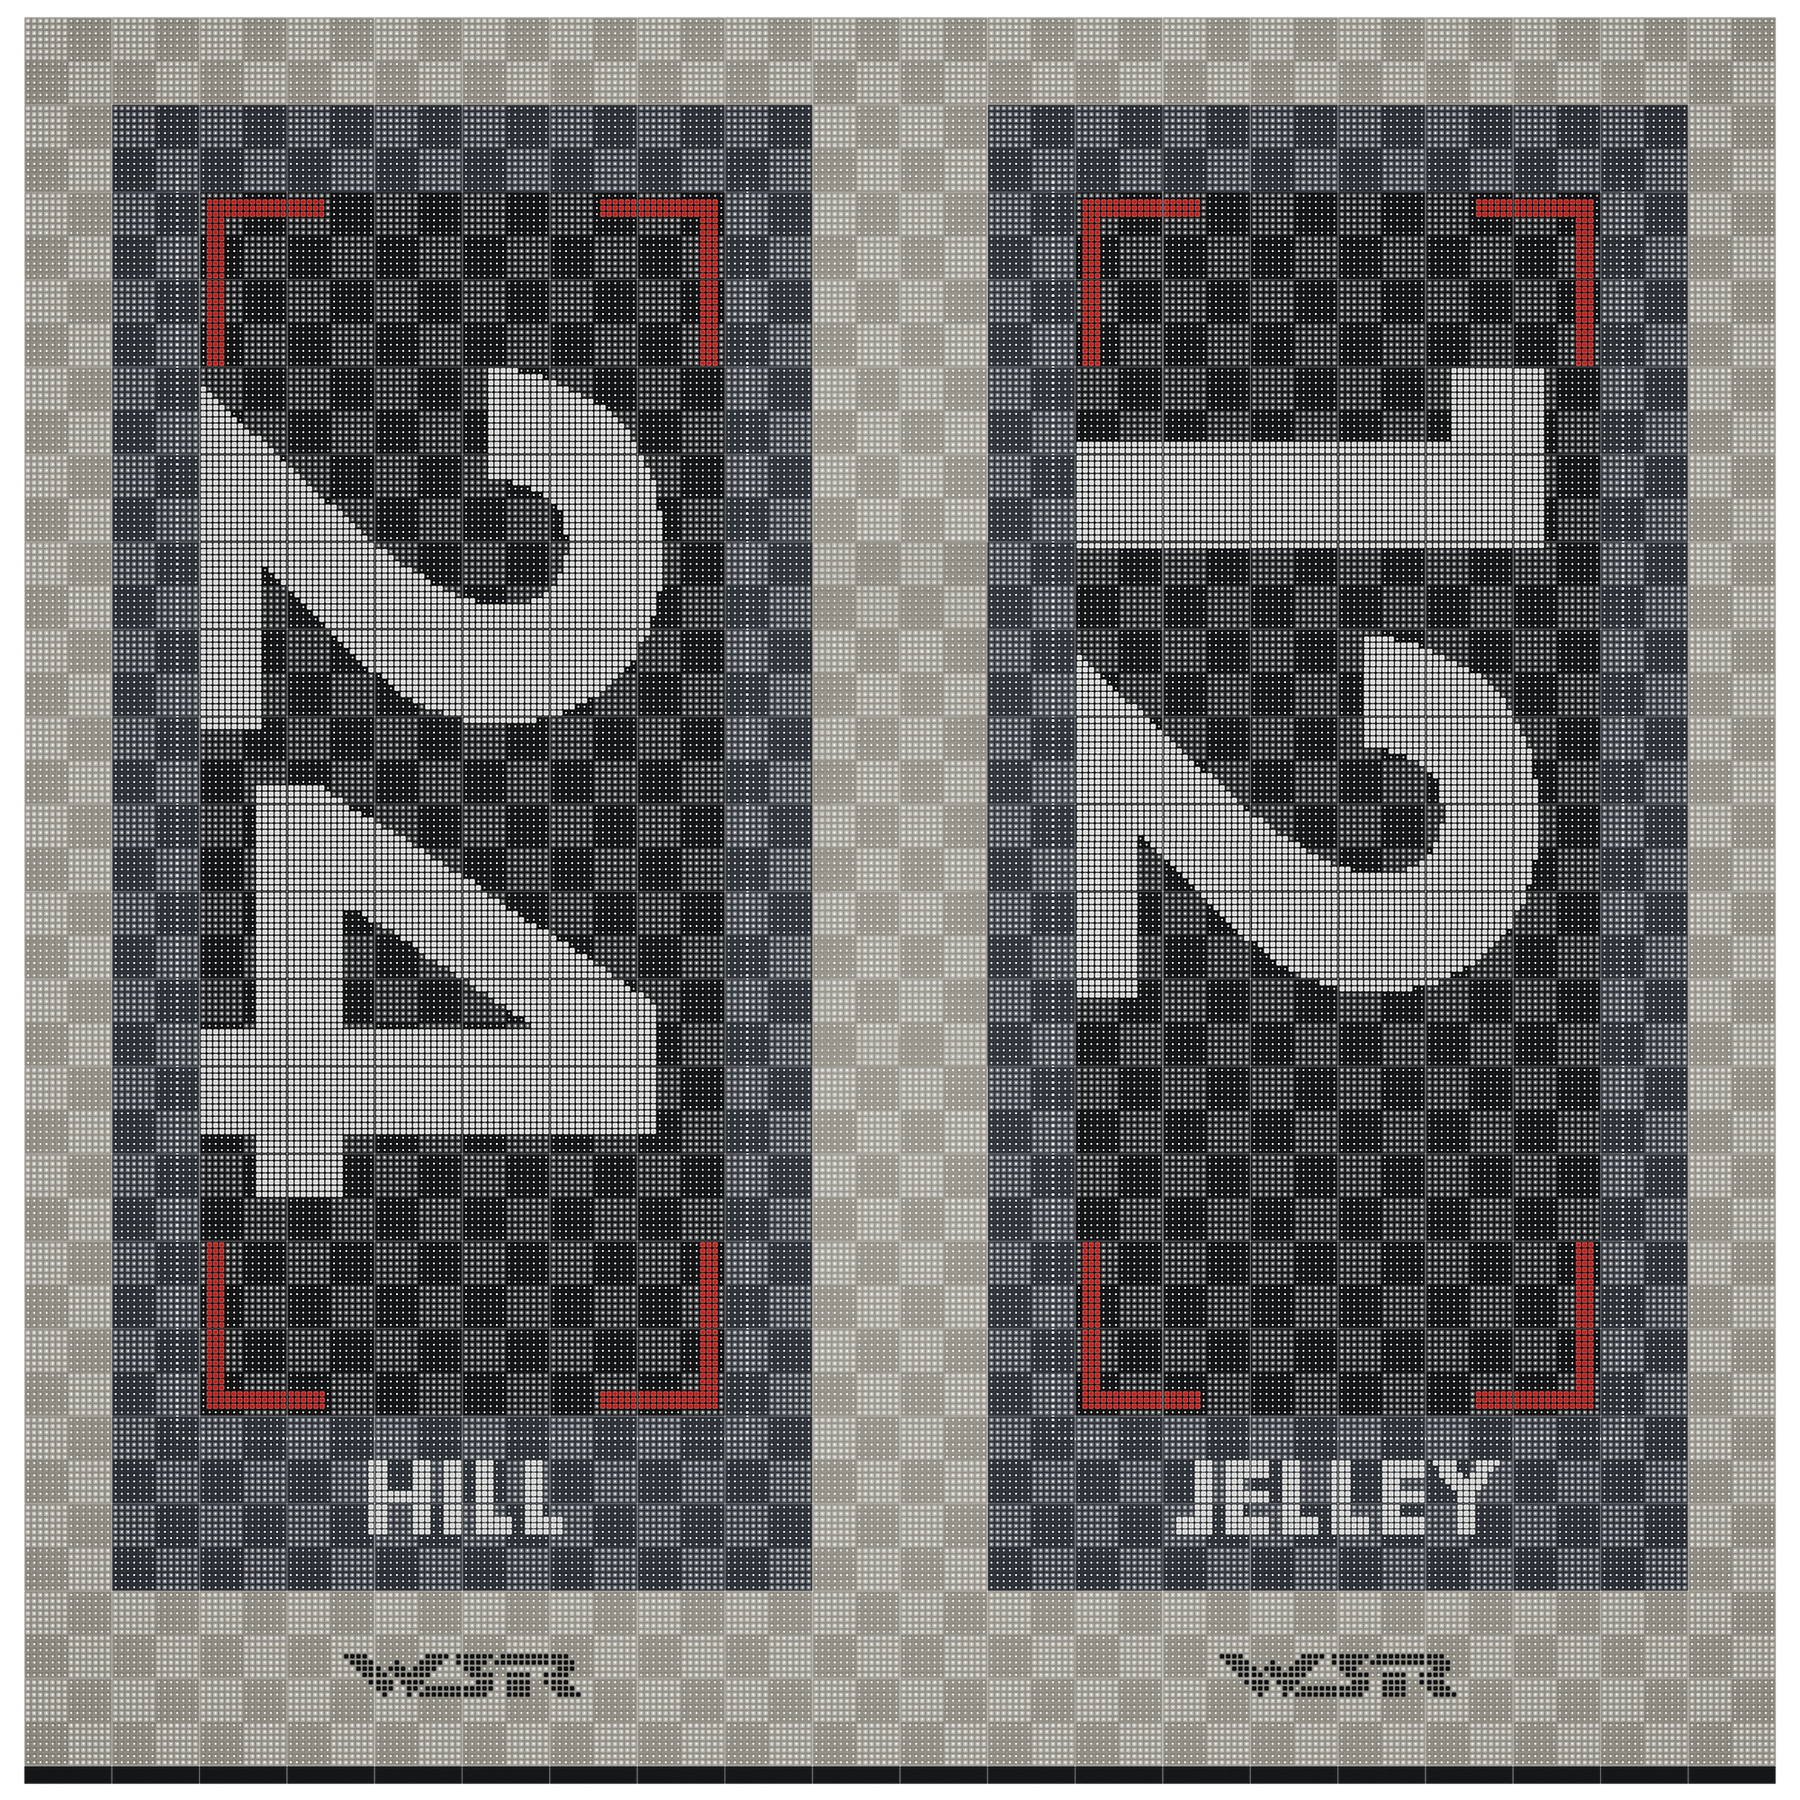 West Surrey Racing - Jake Hill and Stephen Jelley - Double Garage Floor Pack Garage Flooring Pack versodeck